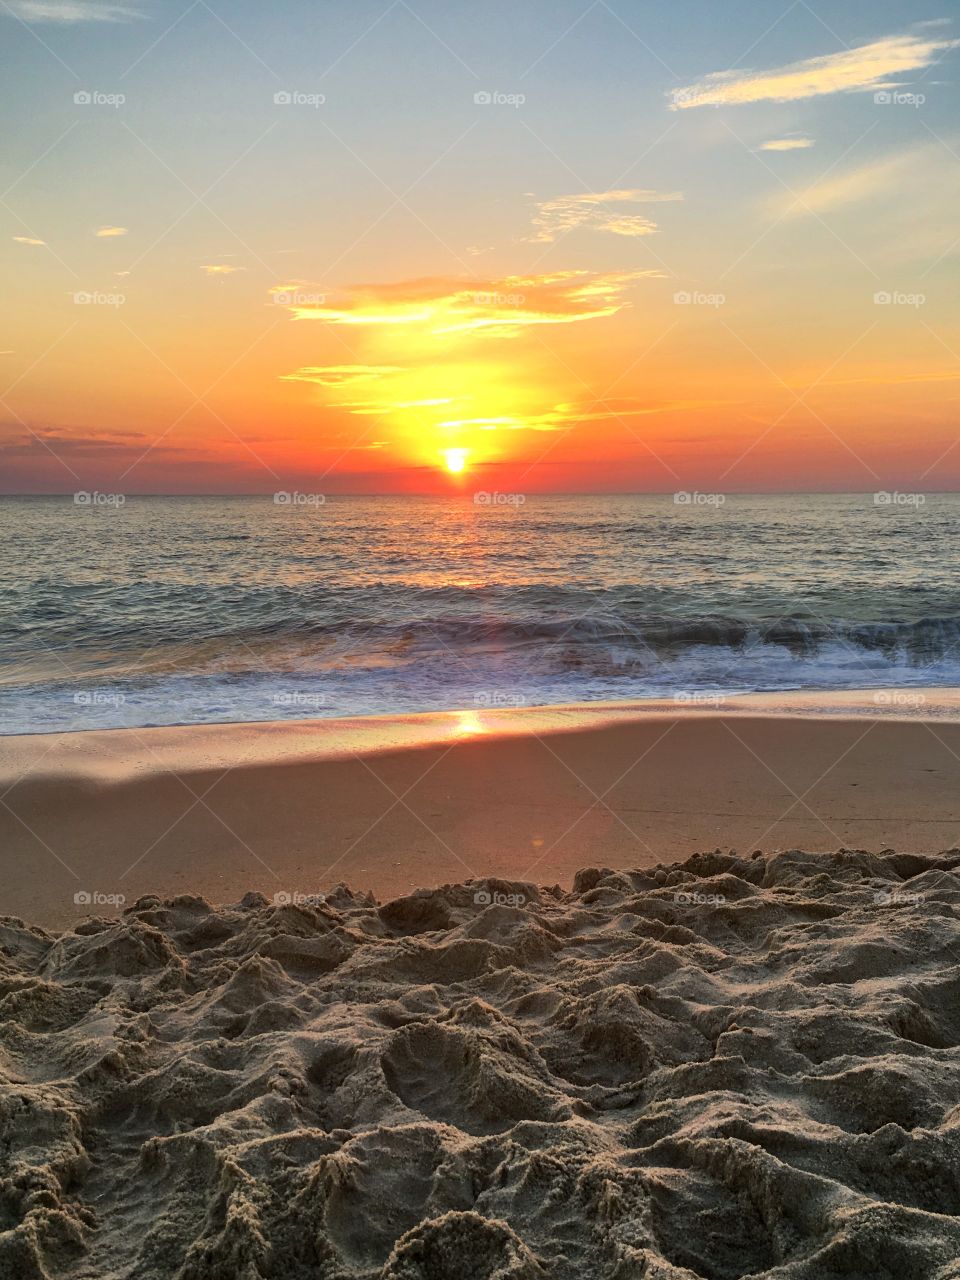 Sunrise at the Beach 